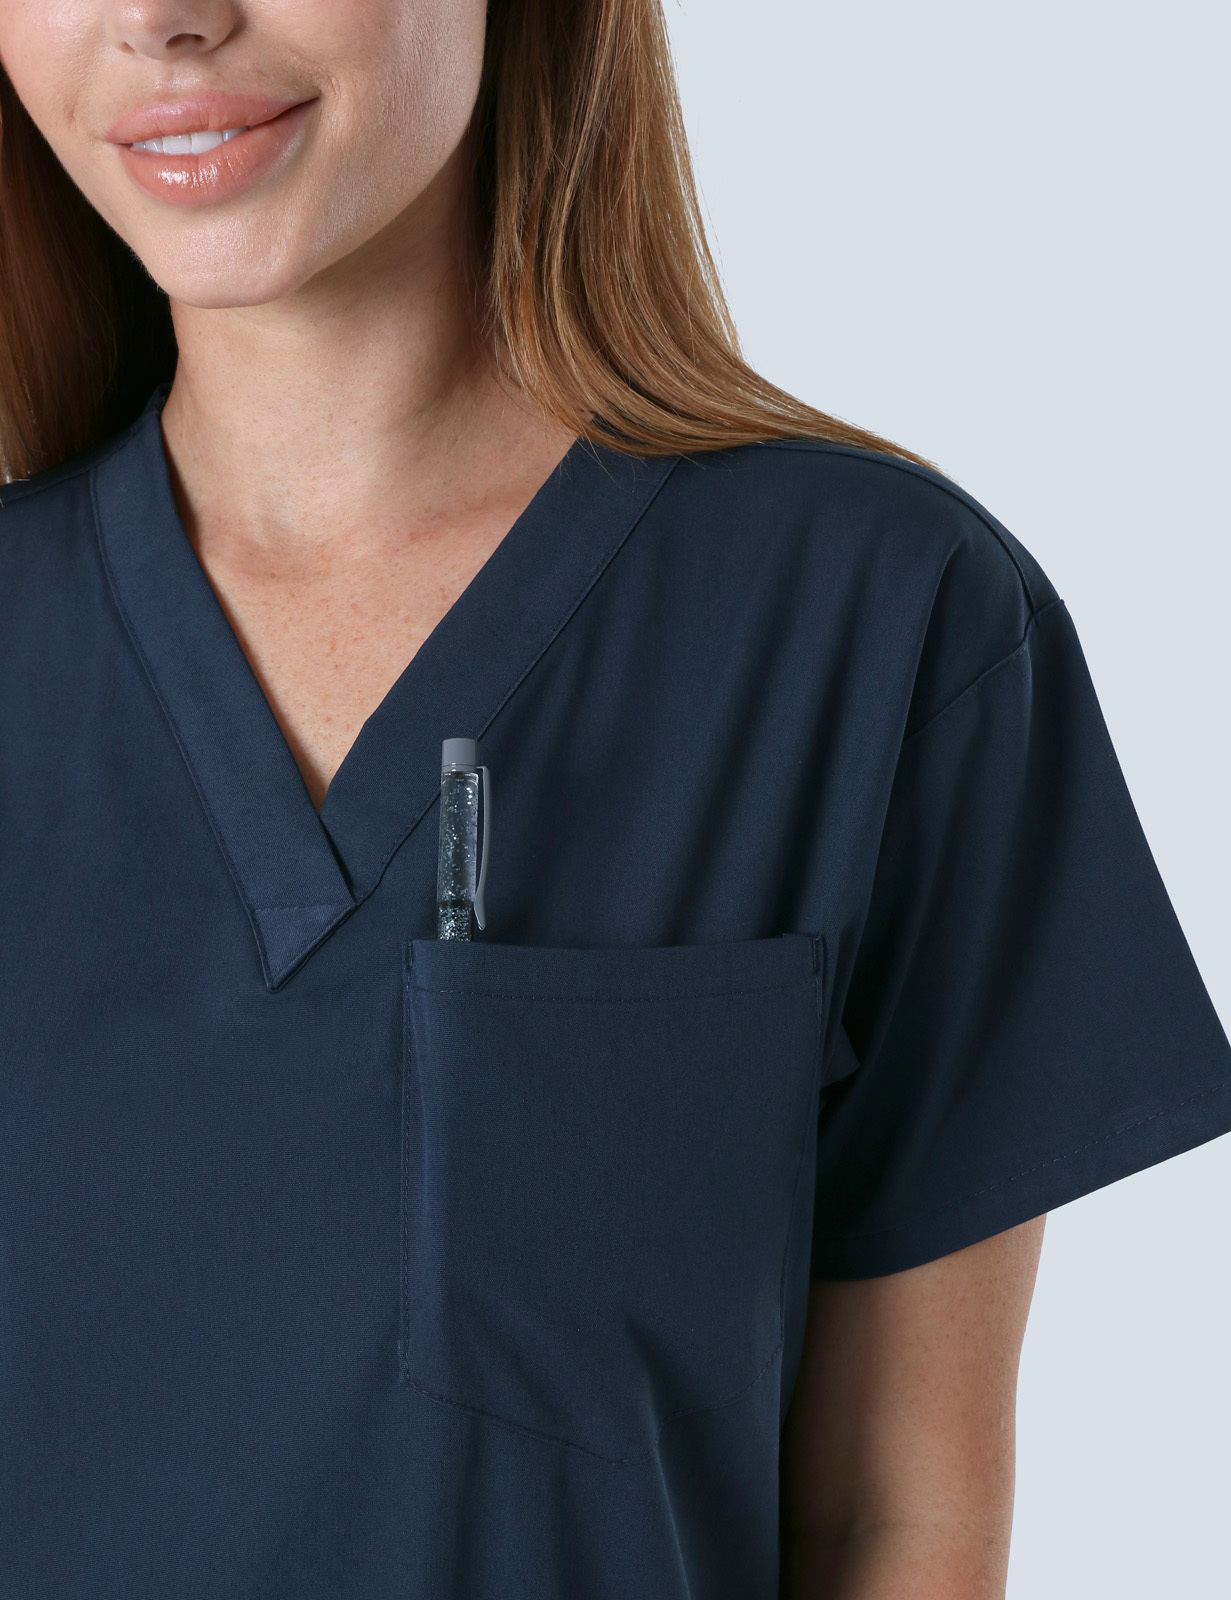 Bundaberg Hospital - Radiographer (4 Pocket Scrub Top and Cargo Pants in Navy incl Logos)